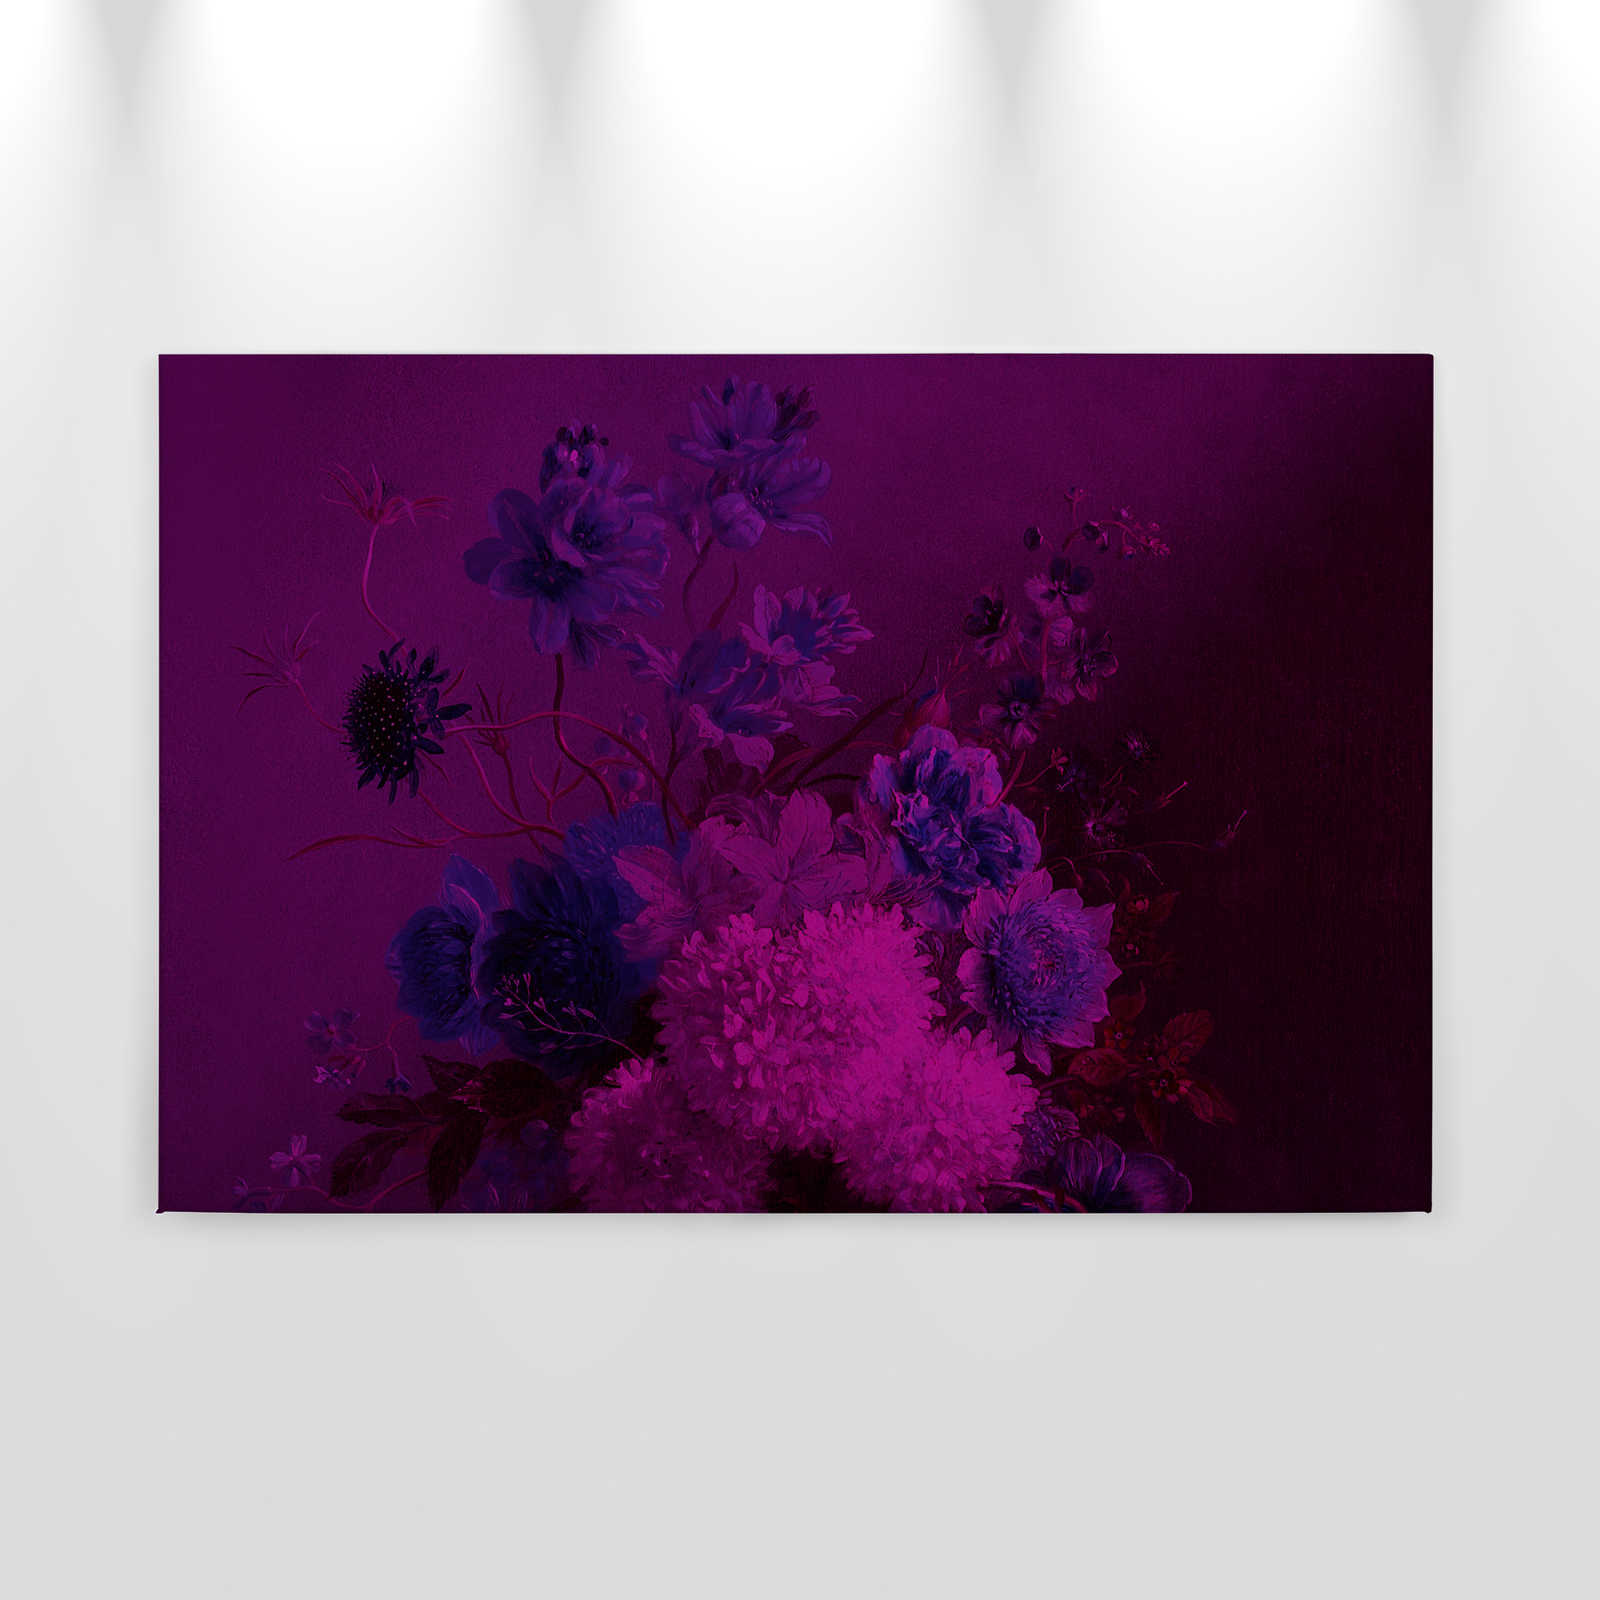             Lienzo neón Pintura con flores Naturaleza muerta | bouquet Vibran 3 - 0,90 m x 0,60 m
        